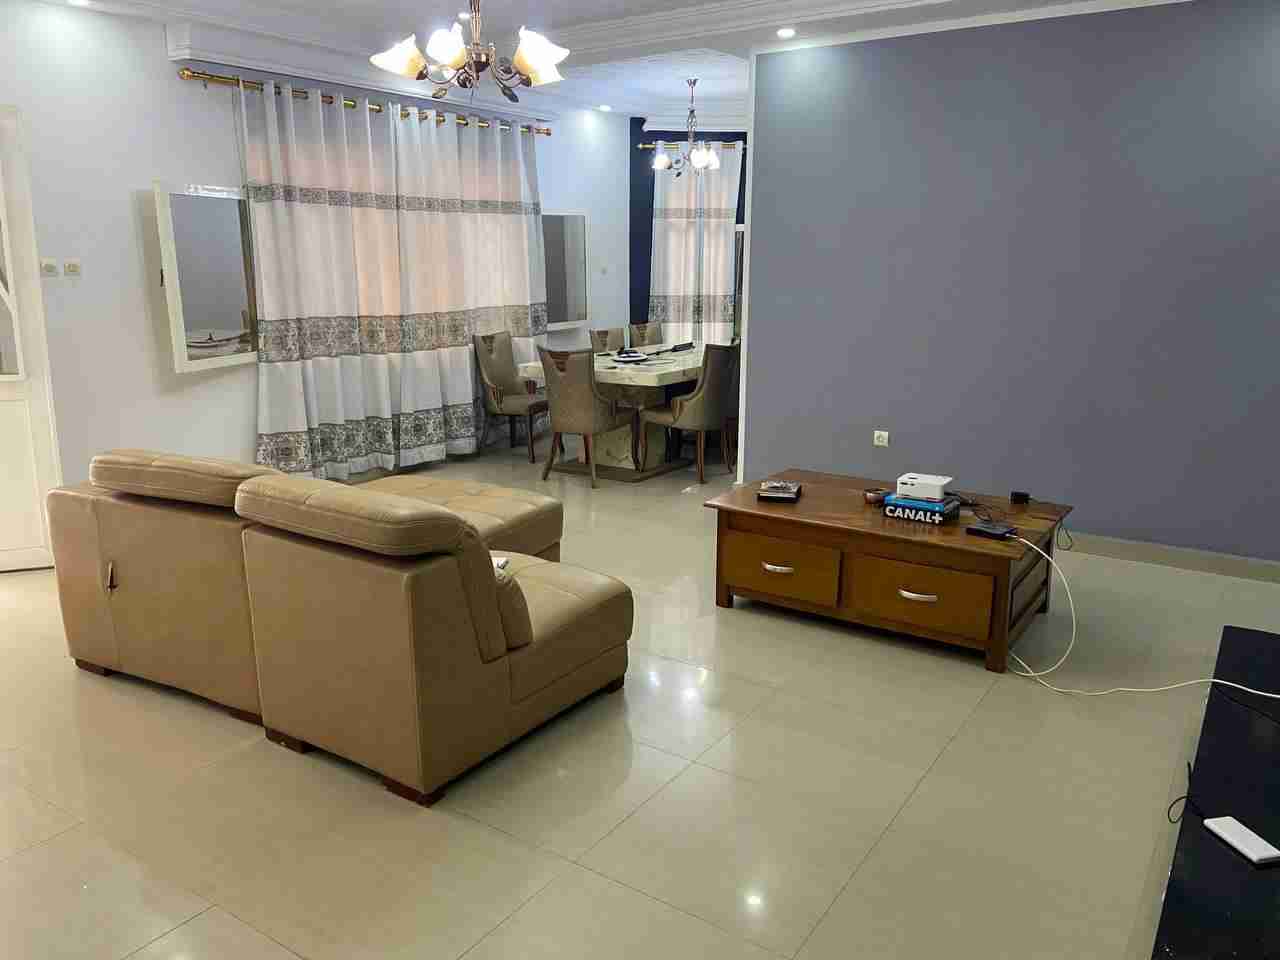 For rent House - Neighborhood Méteo Kinshasa Ngaliema